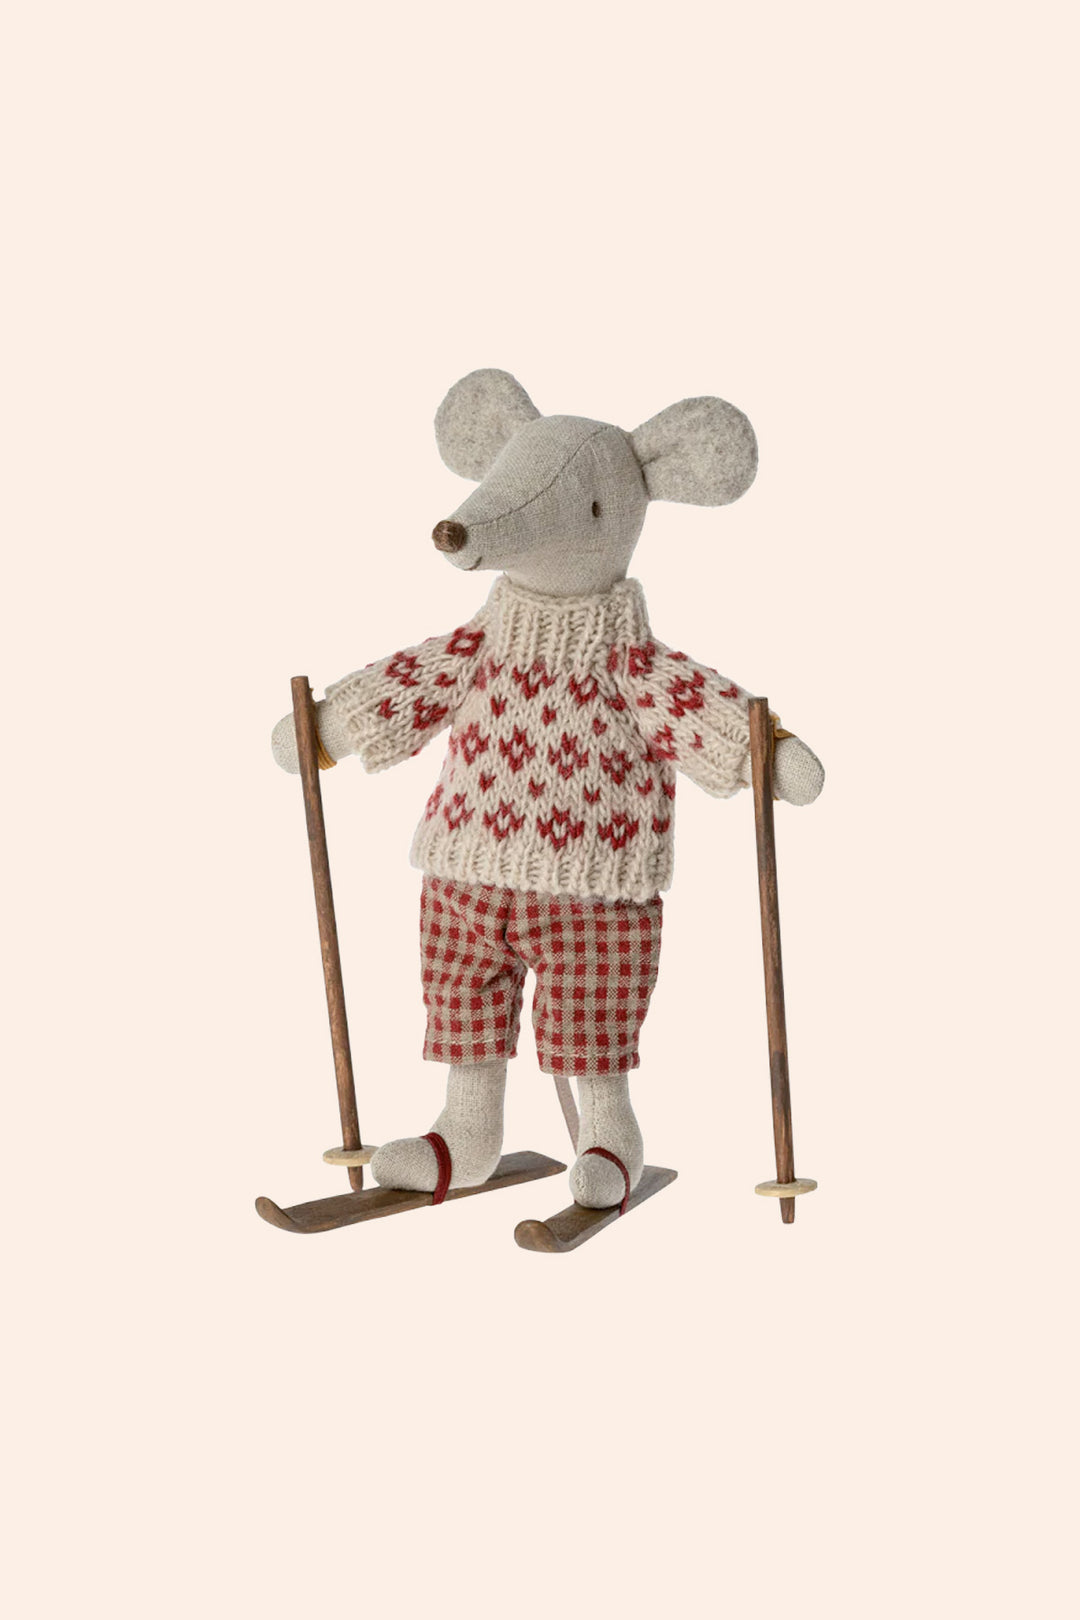 Maileg - Winter Mouse With Ski Set - Mum